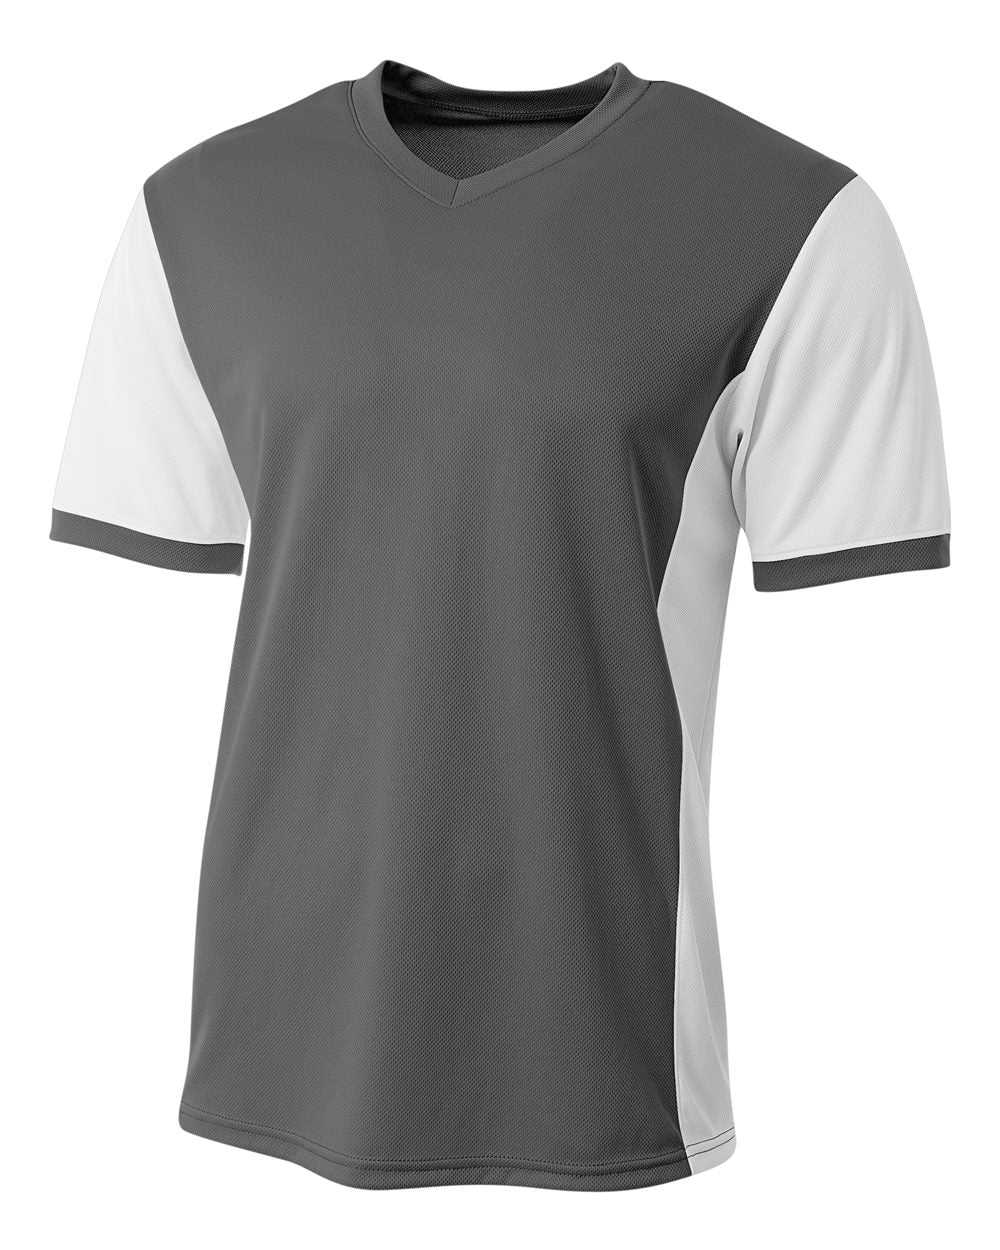 A4 N3017 Premier Soccer Jersey - Graphite White - HIT a Double